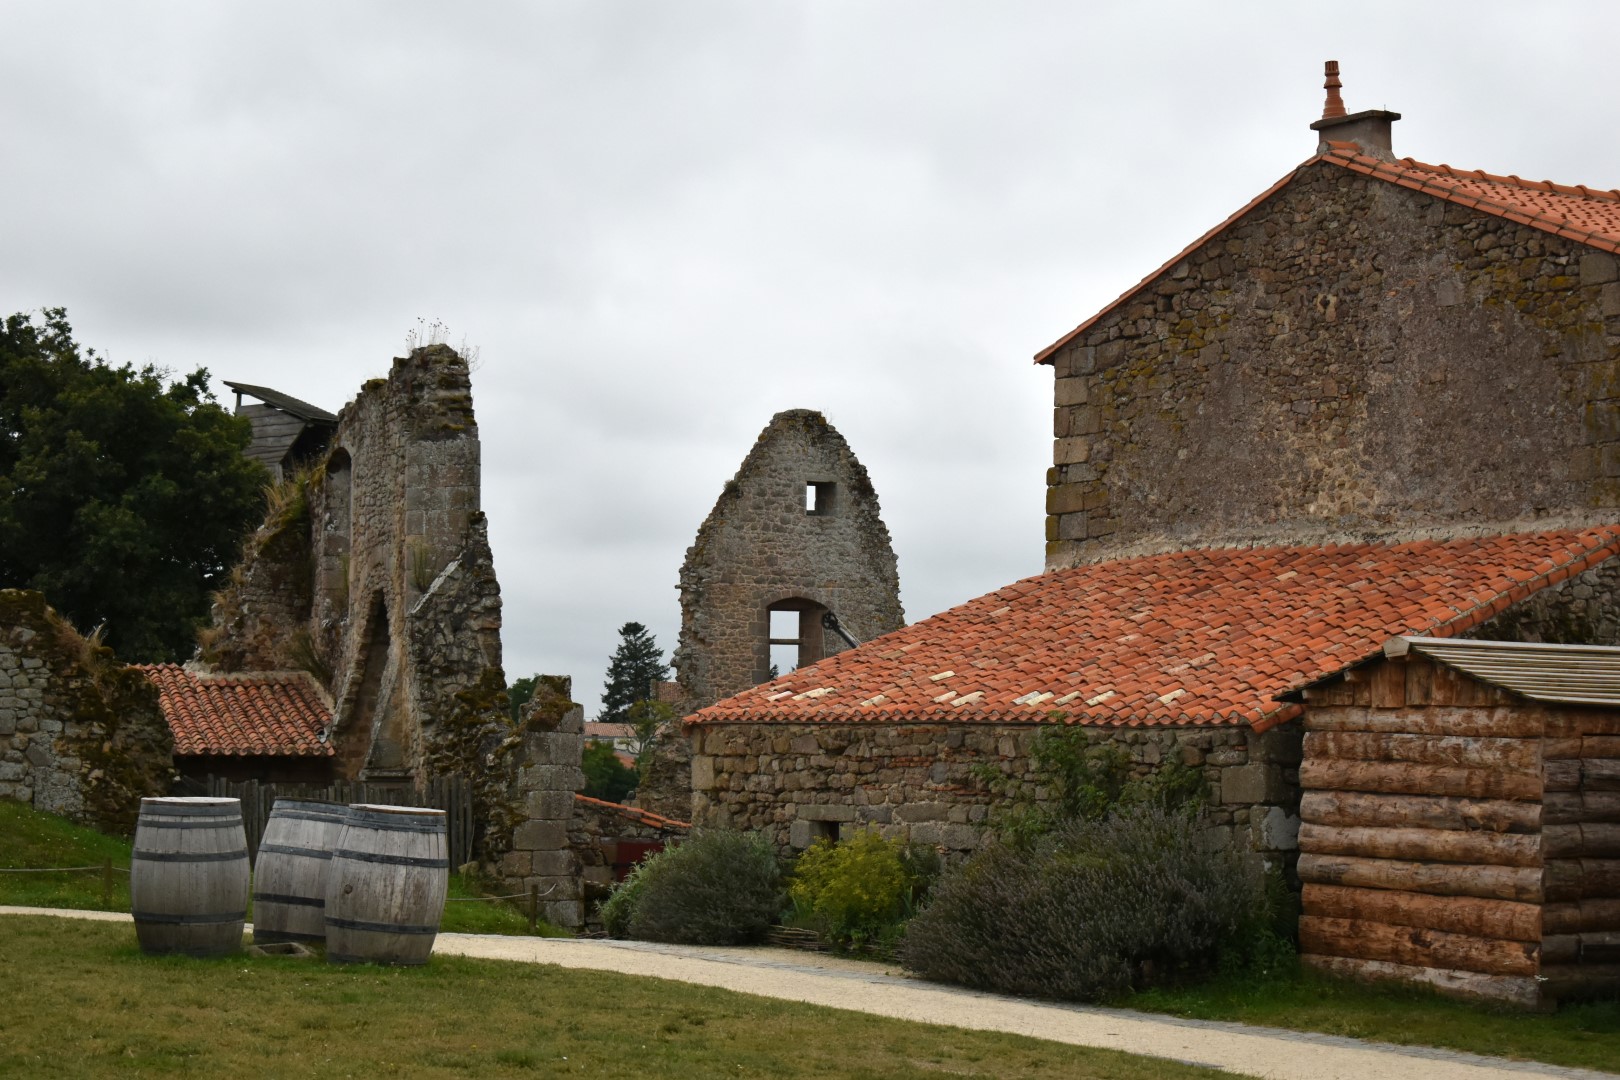 Château de Tiffauges, a medieval castle in Vendée